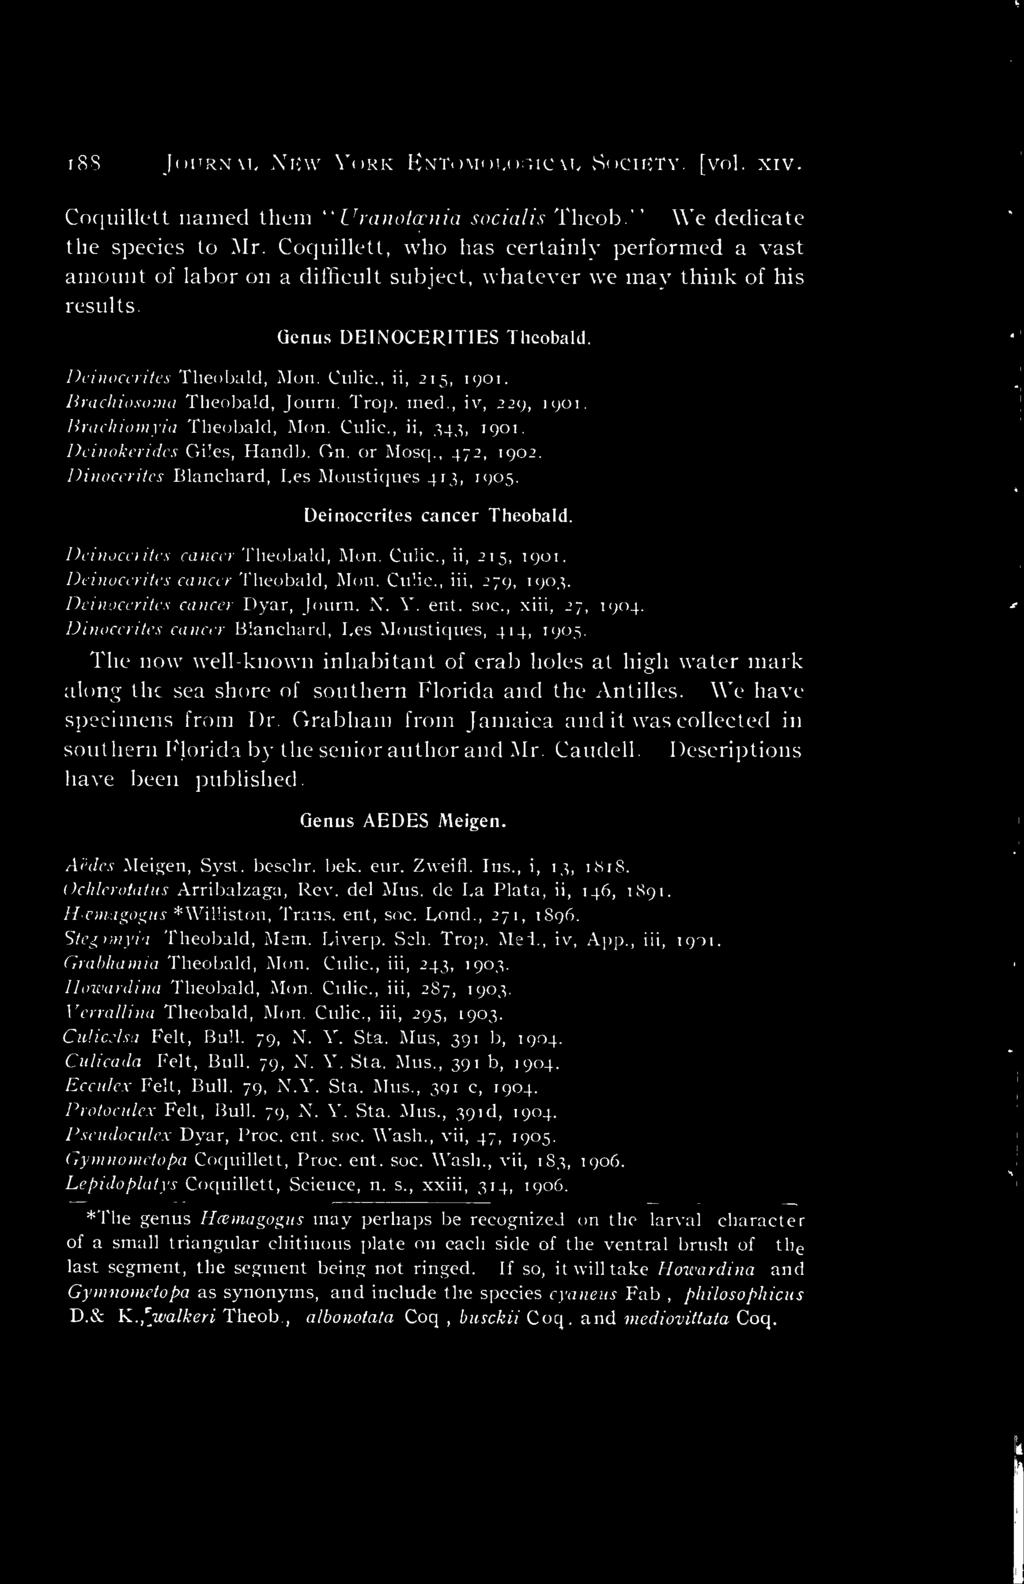 Culic, ii, 215, 1901. Brachiosoma Theobald, Journ. Trop. med., iv, 229, 1901. Brachiomyia Theobald, Mon. Culic, ii, 343, 1901. Deinokerides Giles, Handb. On. or Mosq., 472, 1902.